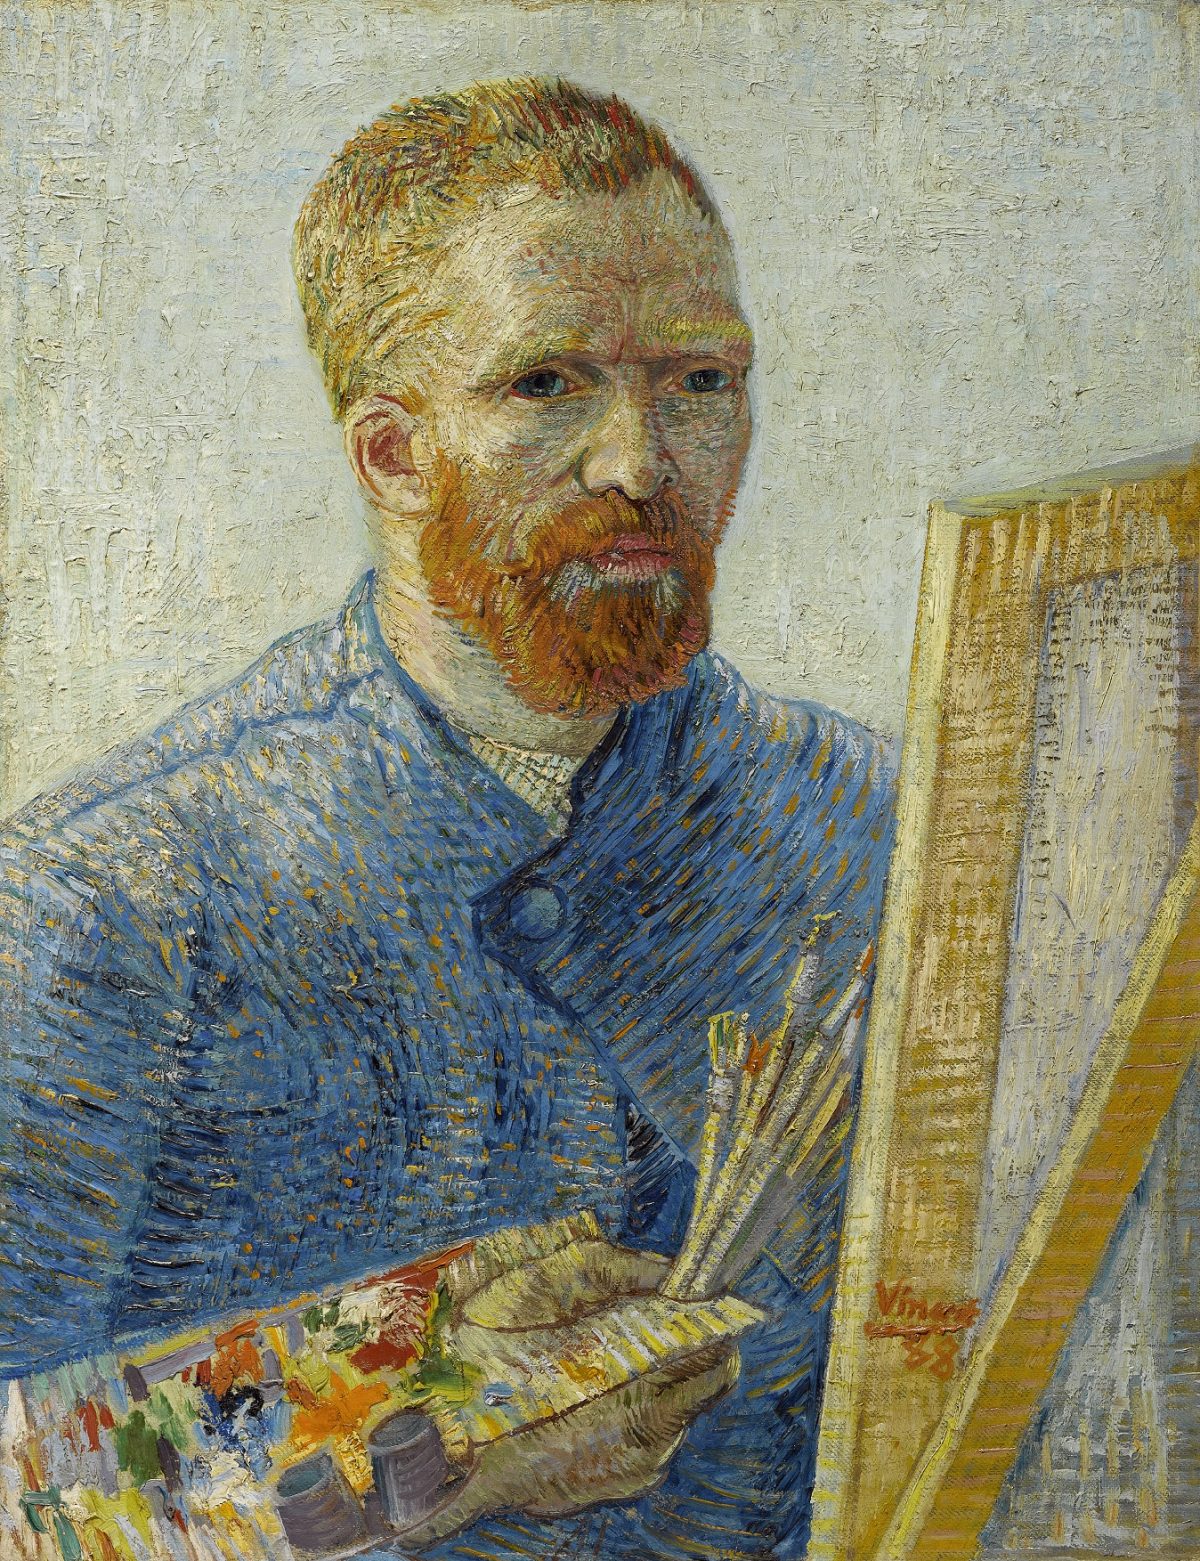 The Wick - Vincent van Gogh (1853 - 1890), Self-Portrait as a Painter, December - February 1888, Van Gogh Museum, Amsterdam (Vincent van Gogh Foundation)